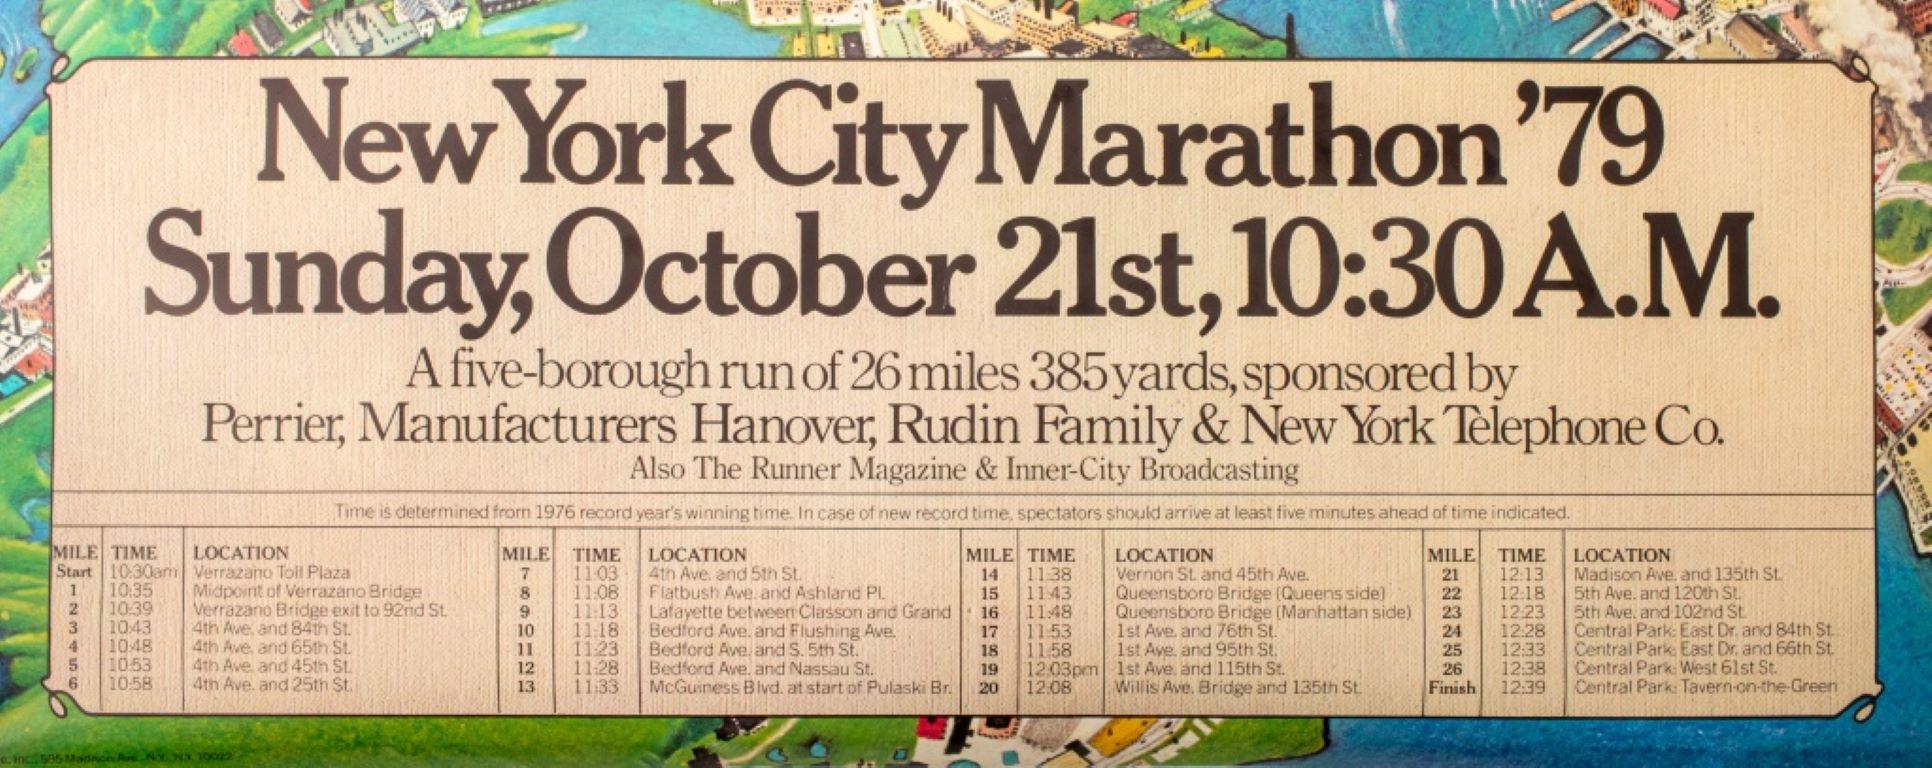 Perrier New York City Marathon Poster, 1979 For Sale 3